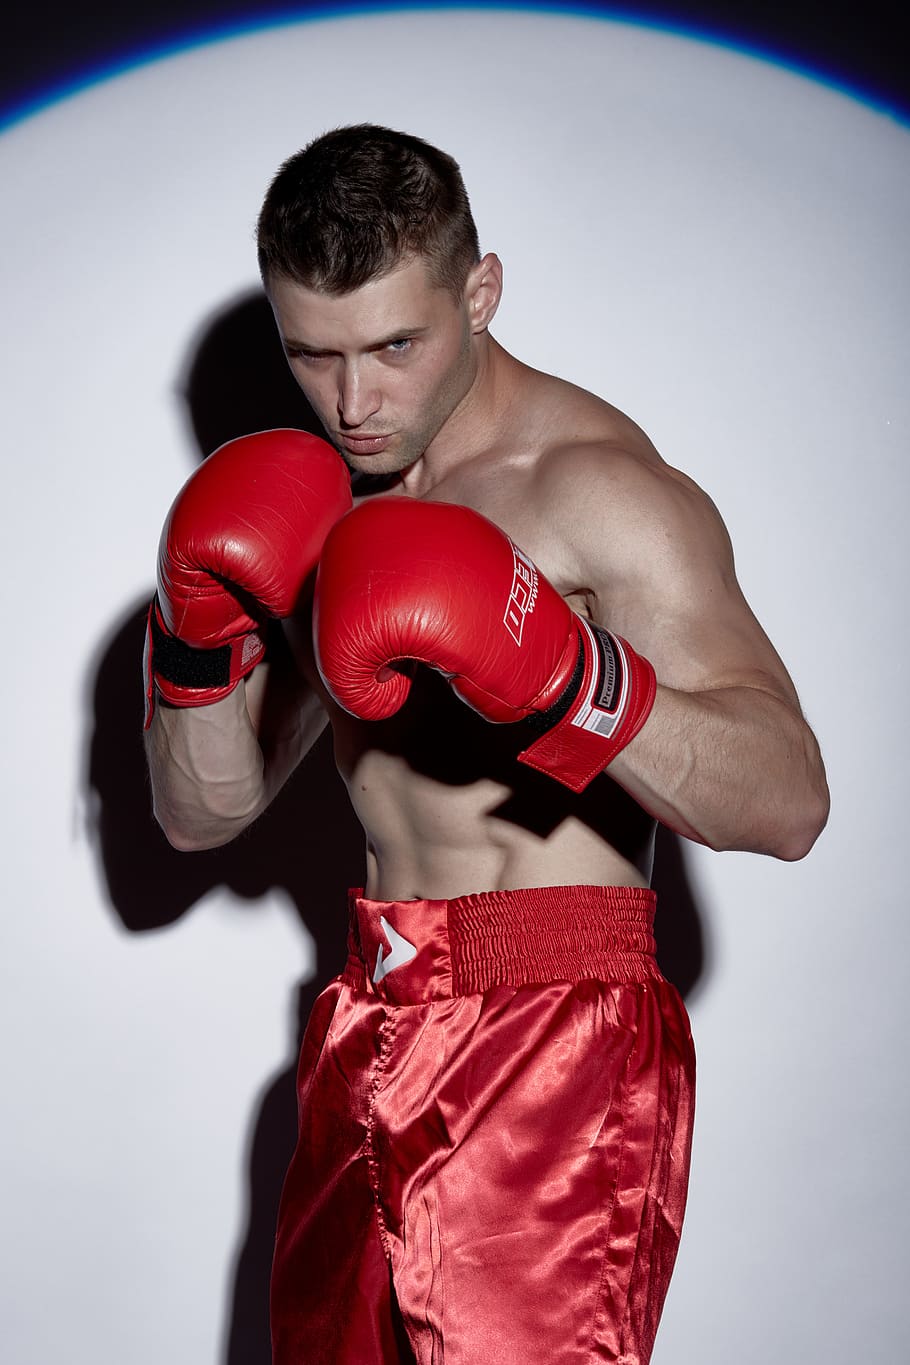 boxeo, kickboxing, modelo, hombres, lucha, rojo, imagen, nuevo, boxeador, batalla